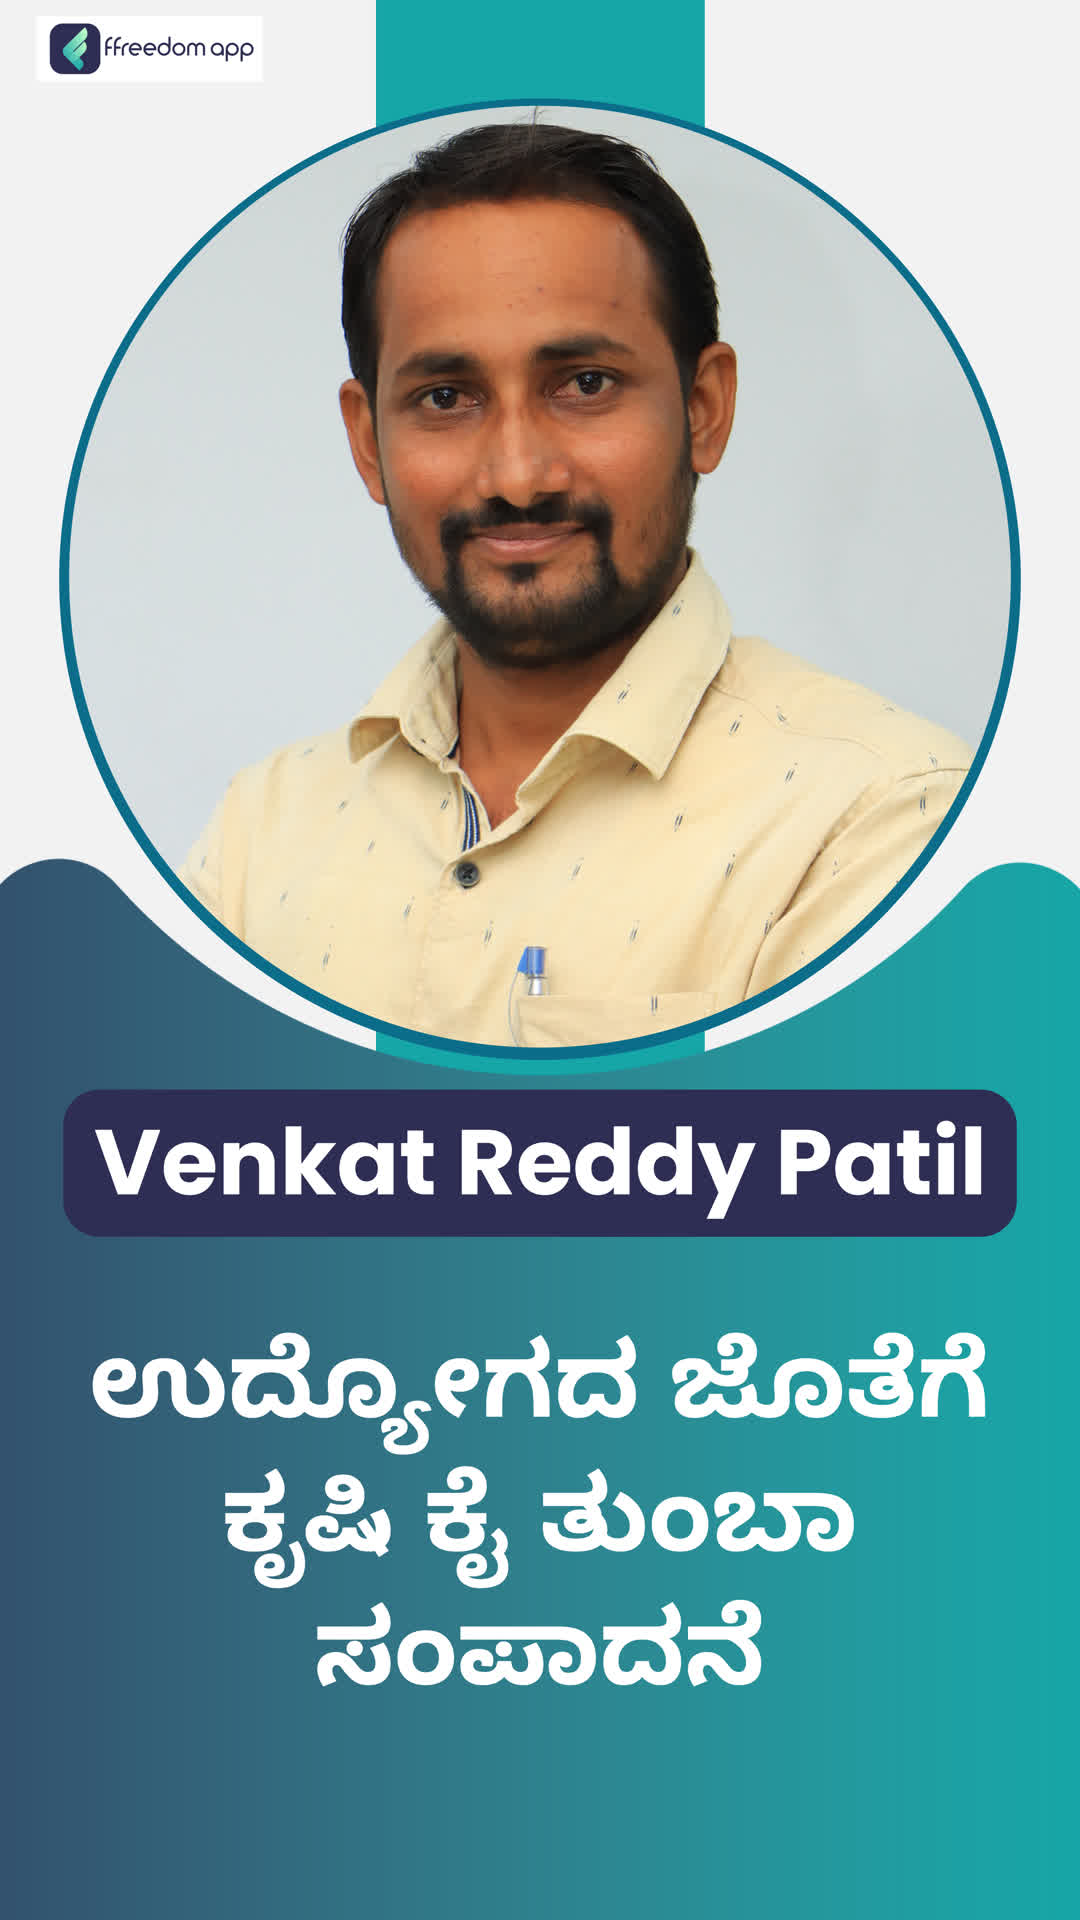 venkat reddyn's Honest Review of ffreedom app - Raichur ,Karnataka